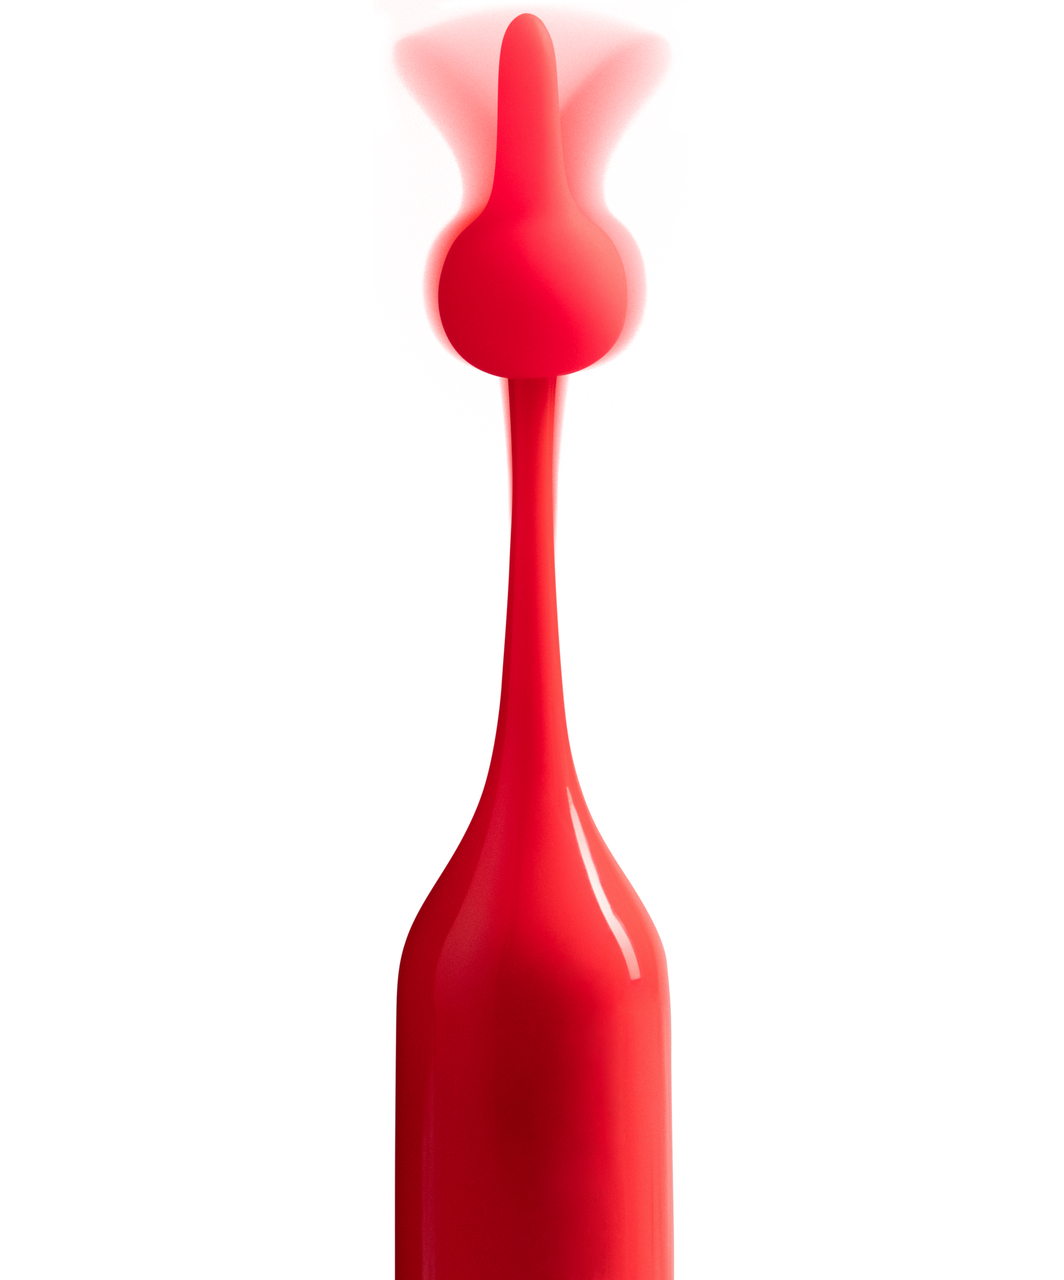 Romp Pop vibrating clitoral stimulator